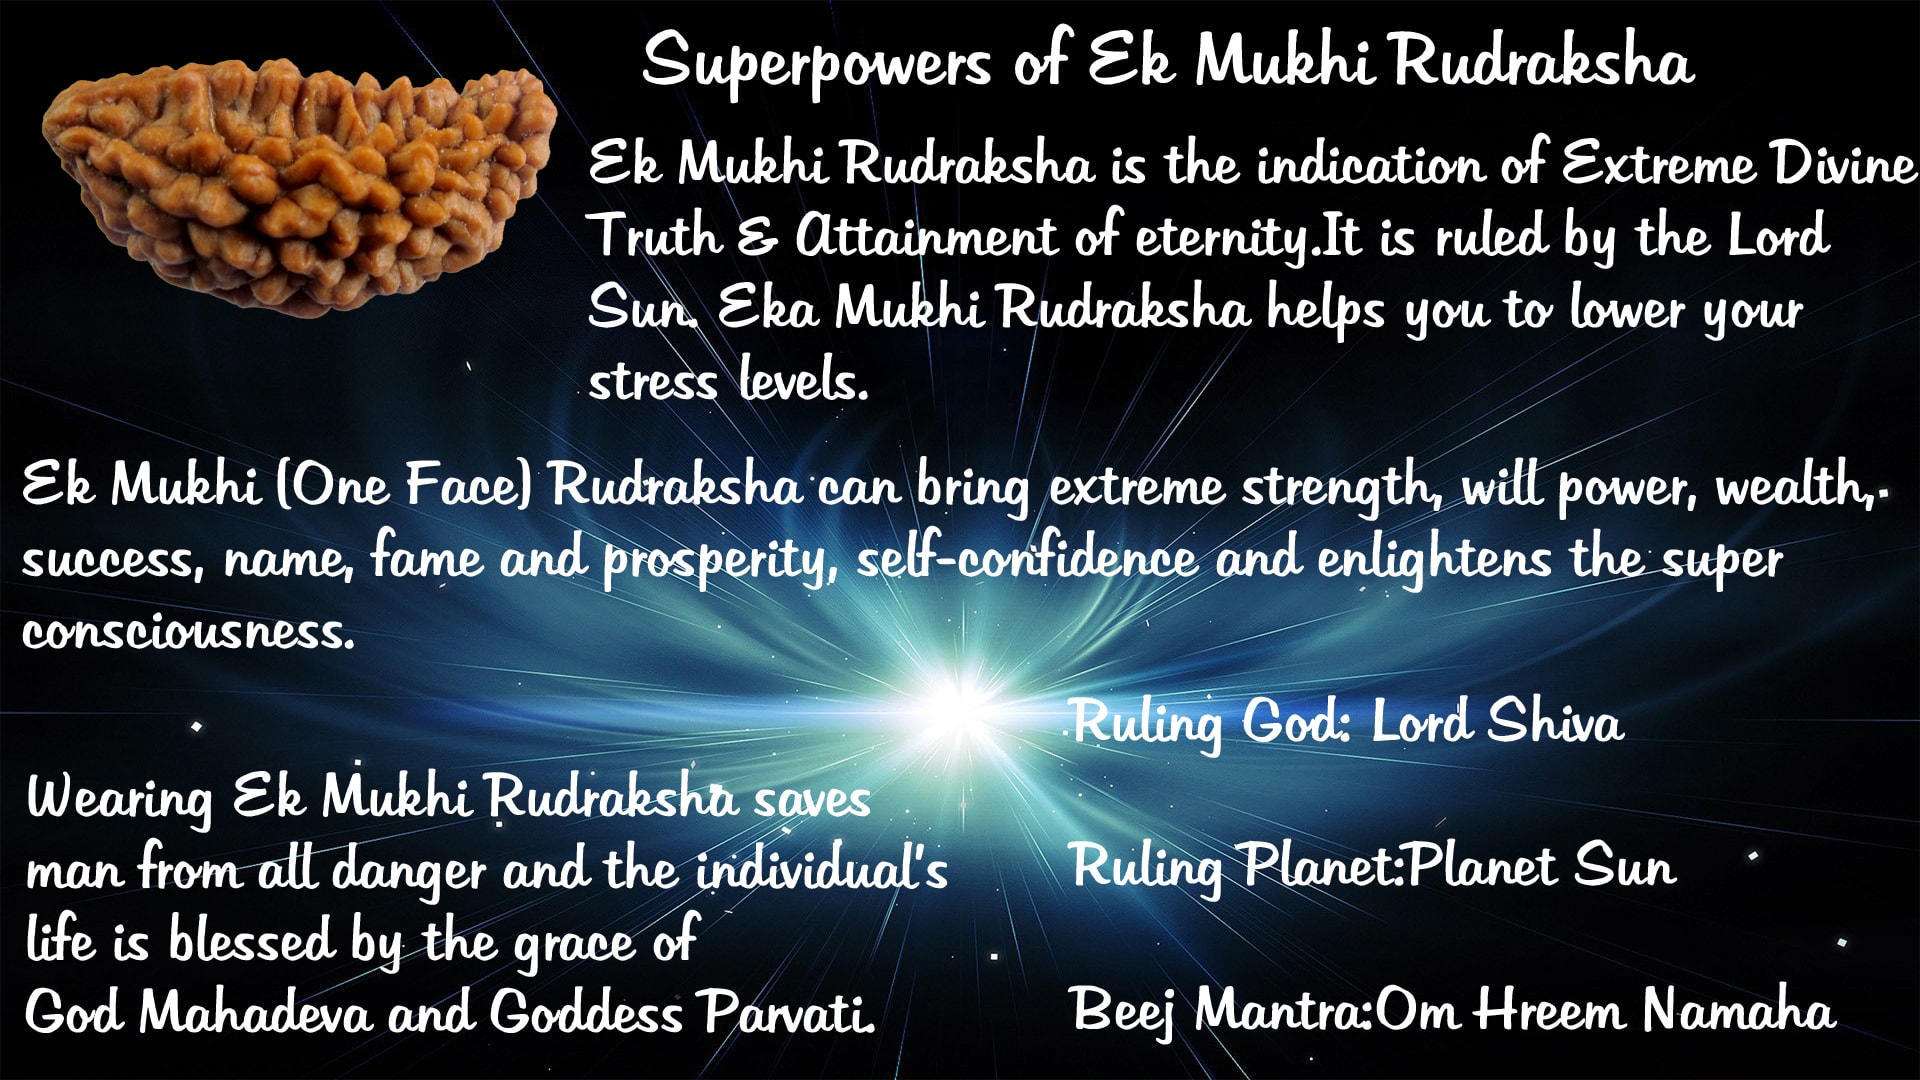 Superpowers of Ek Mukhi Rudraksha